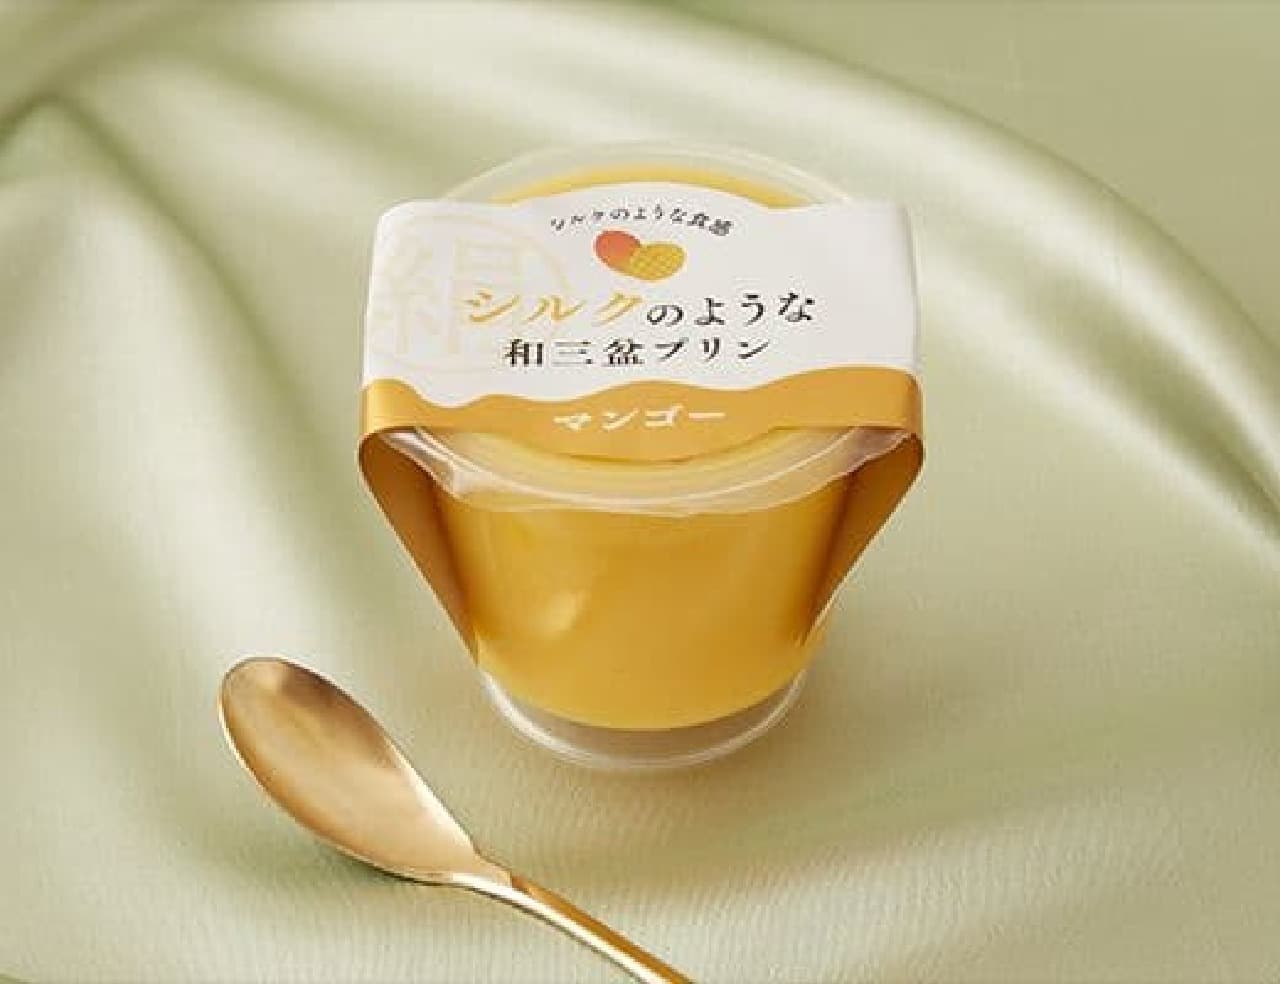 LAWSON "Tokushima Sangyo Silky Wasanbon Pudding Mango 120g